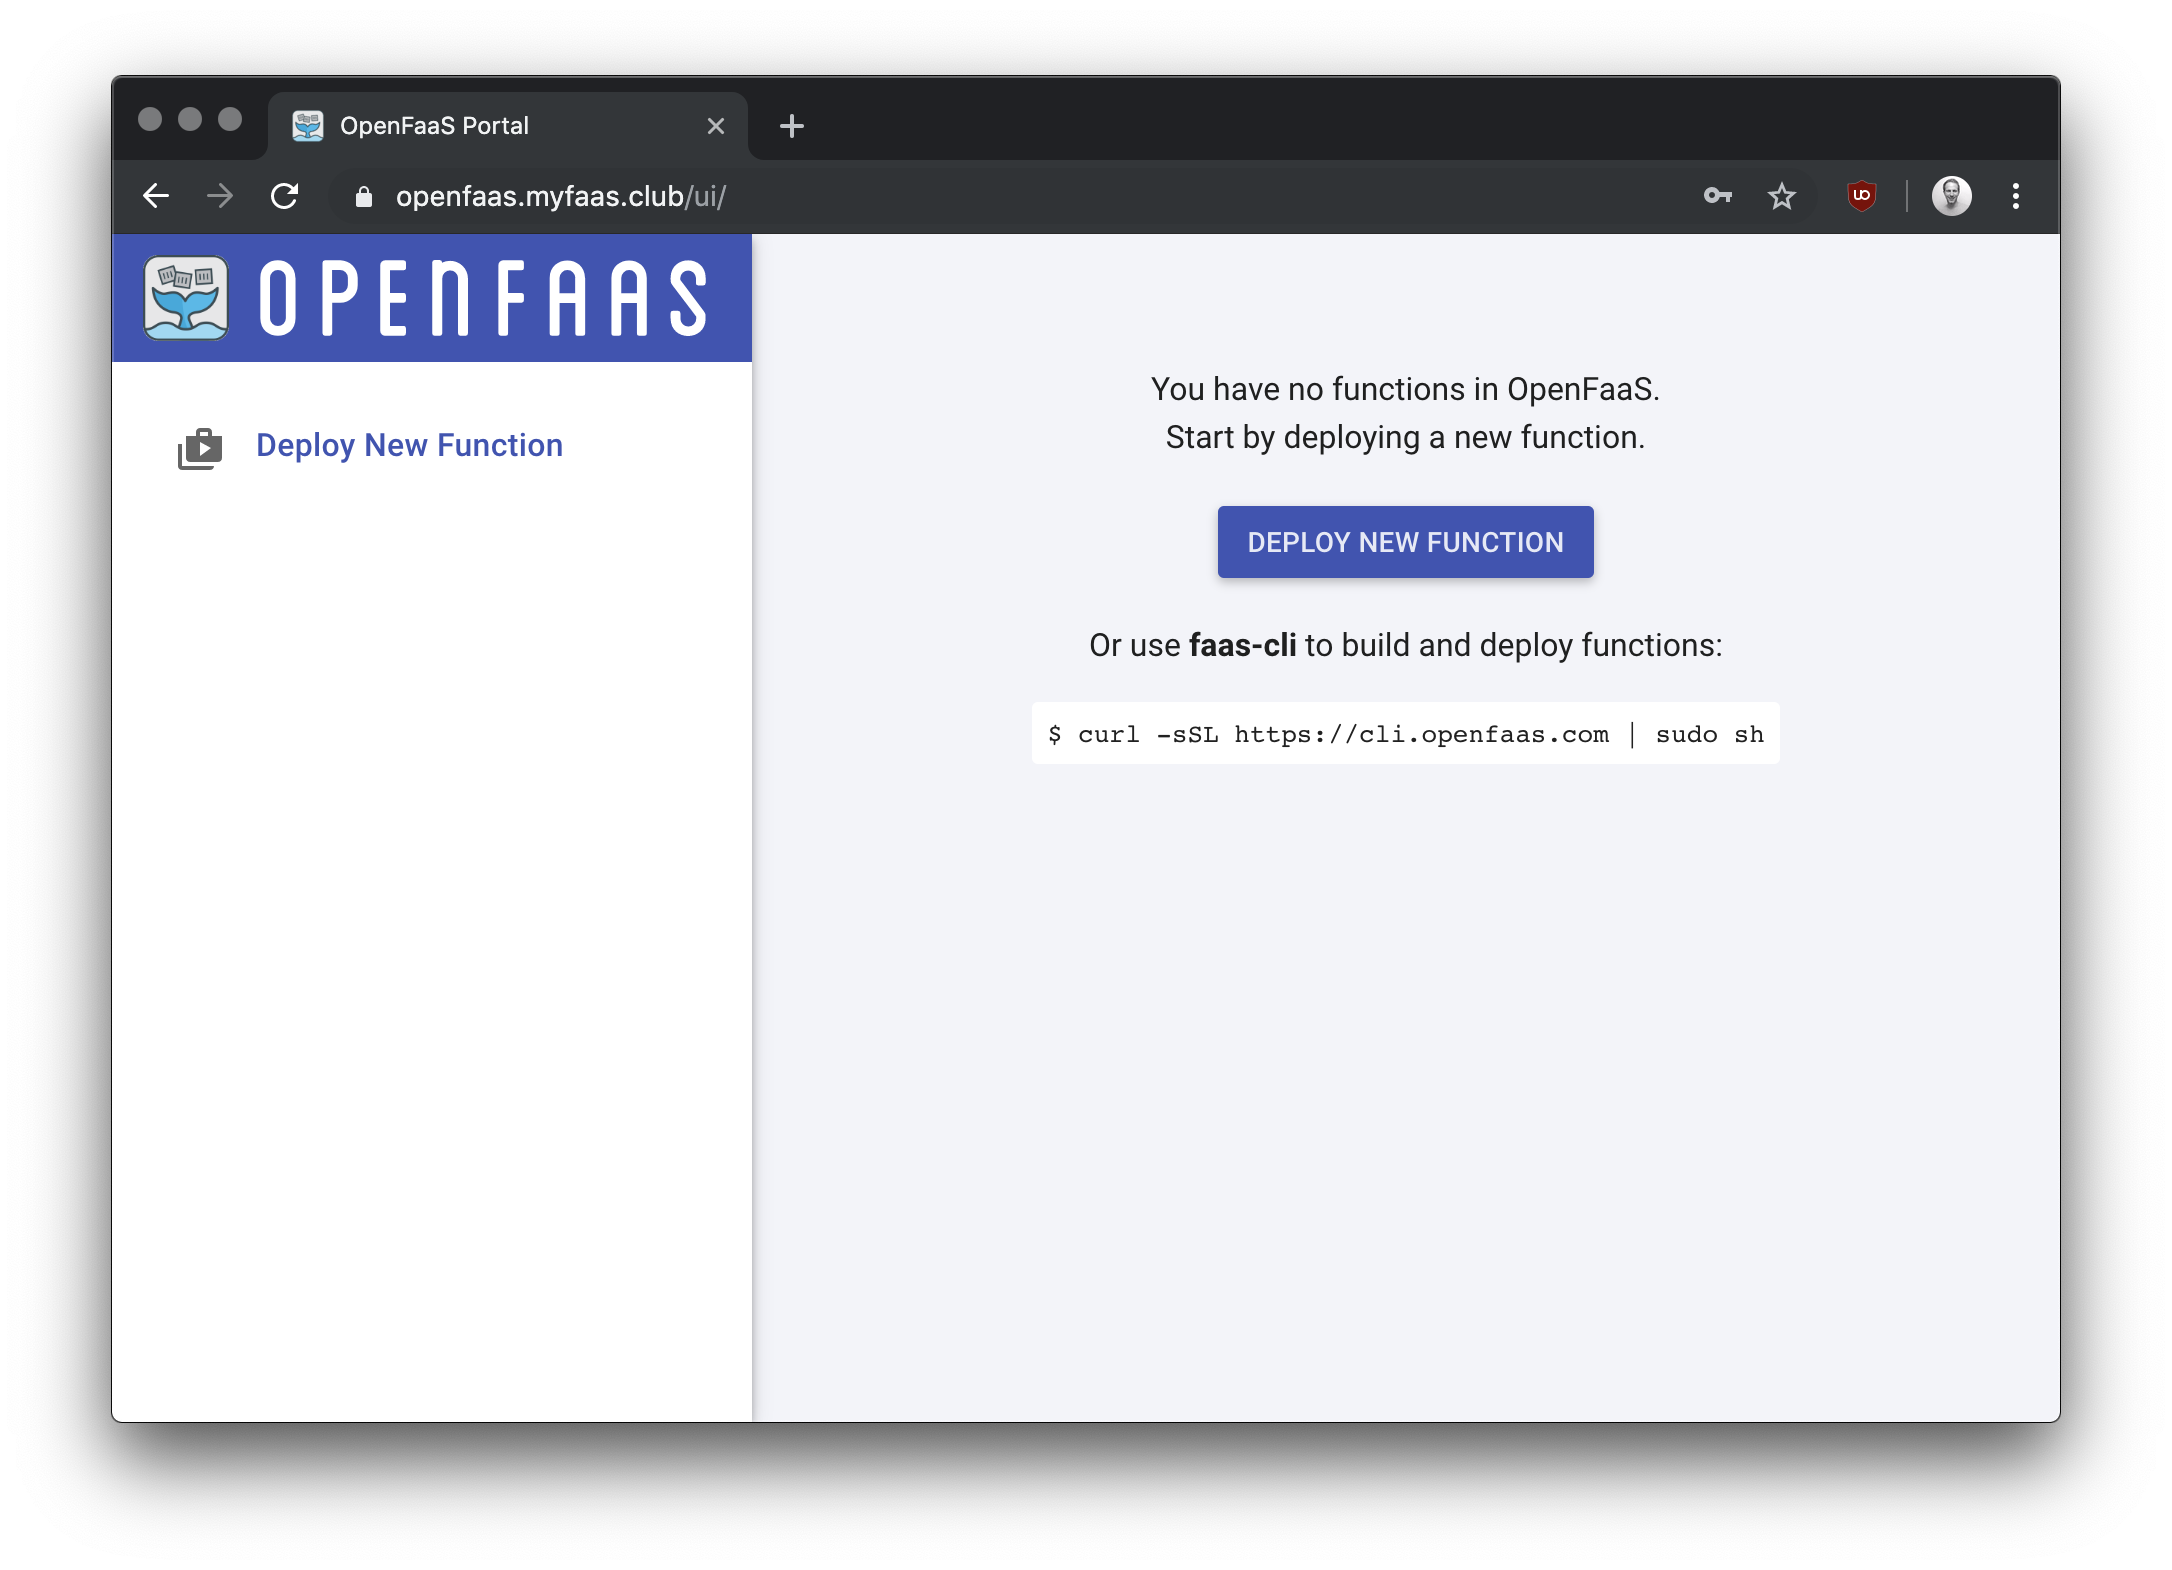 OpenFaaS Portal